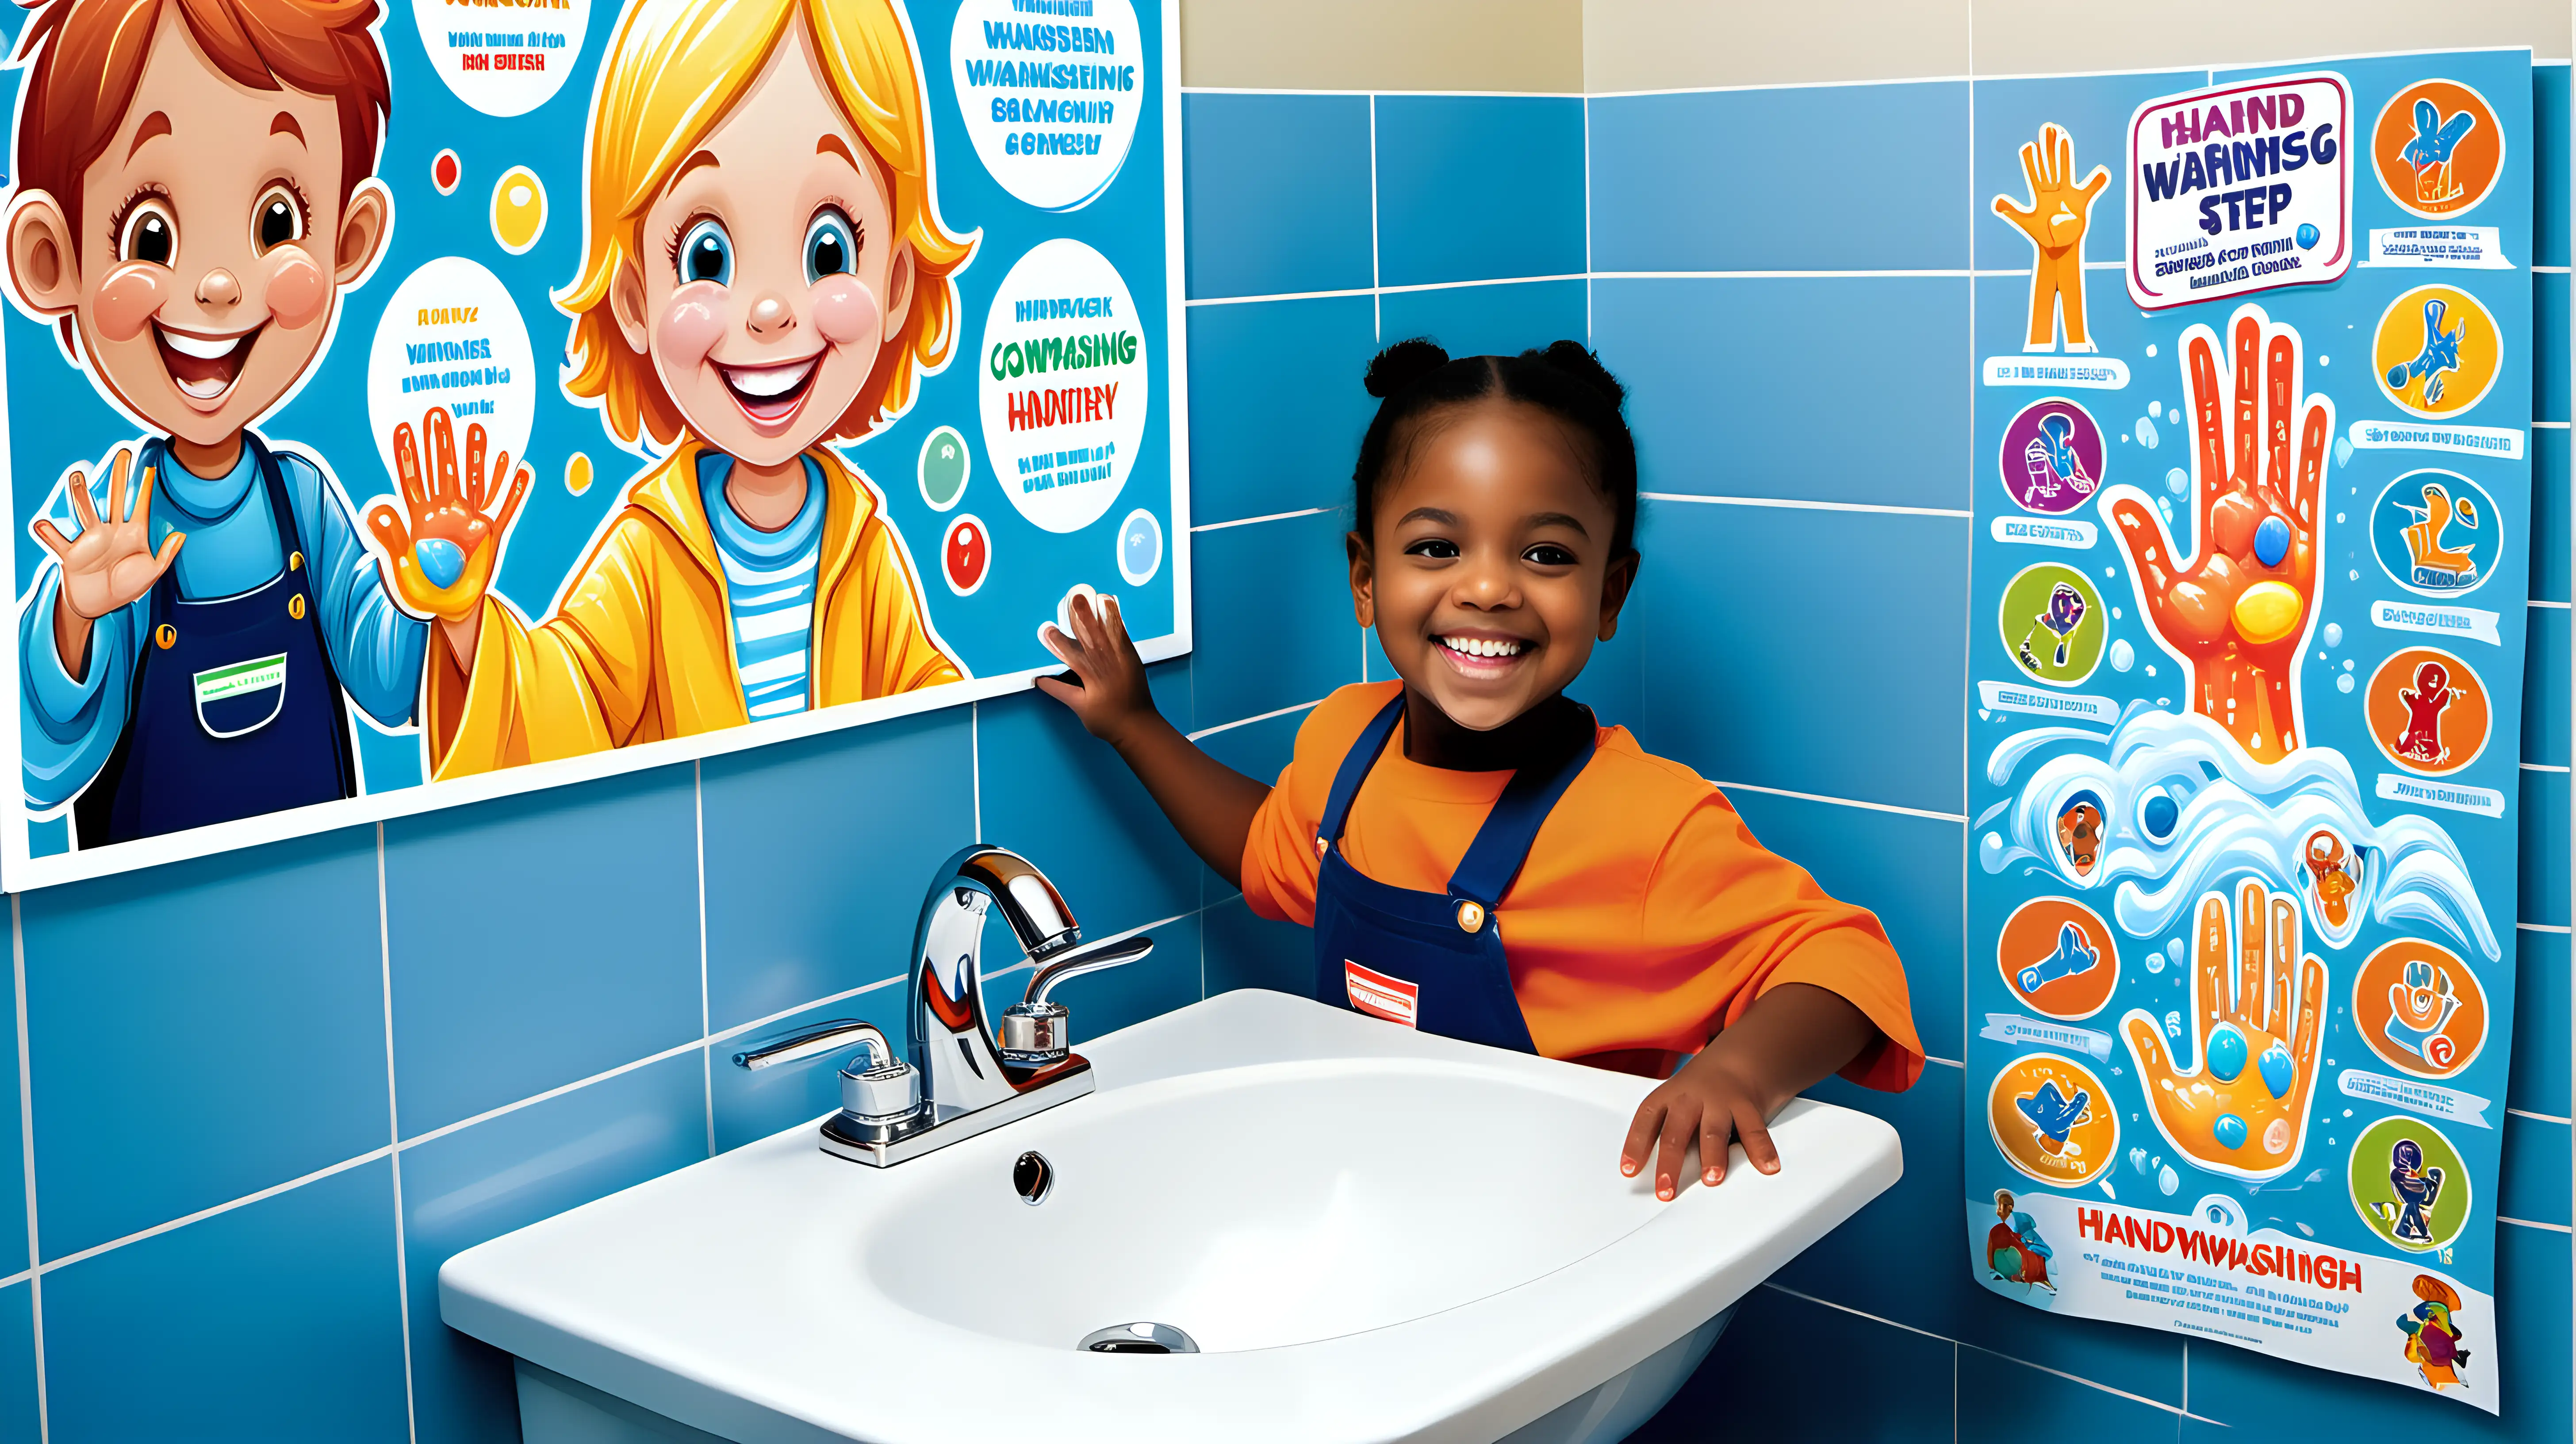 Joyful Handwashing Education Childs Delight in Colorful Bathroom Setup